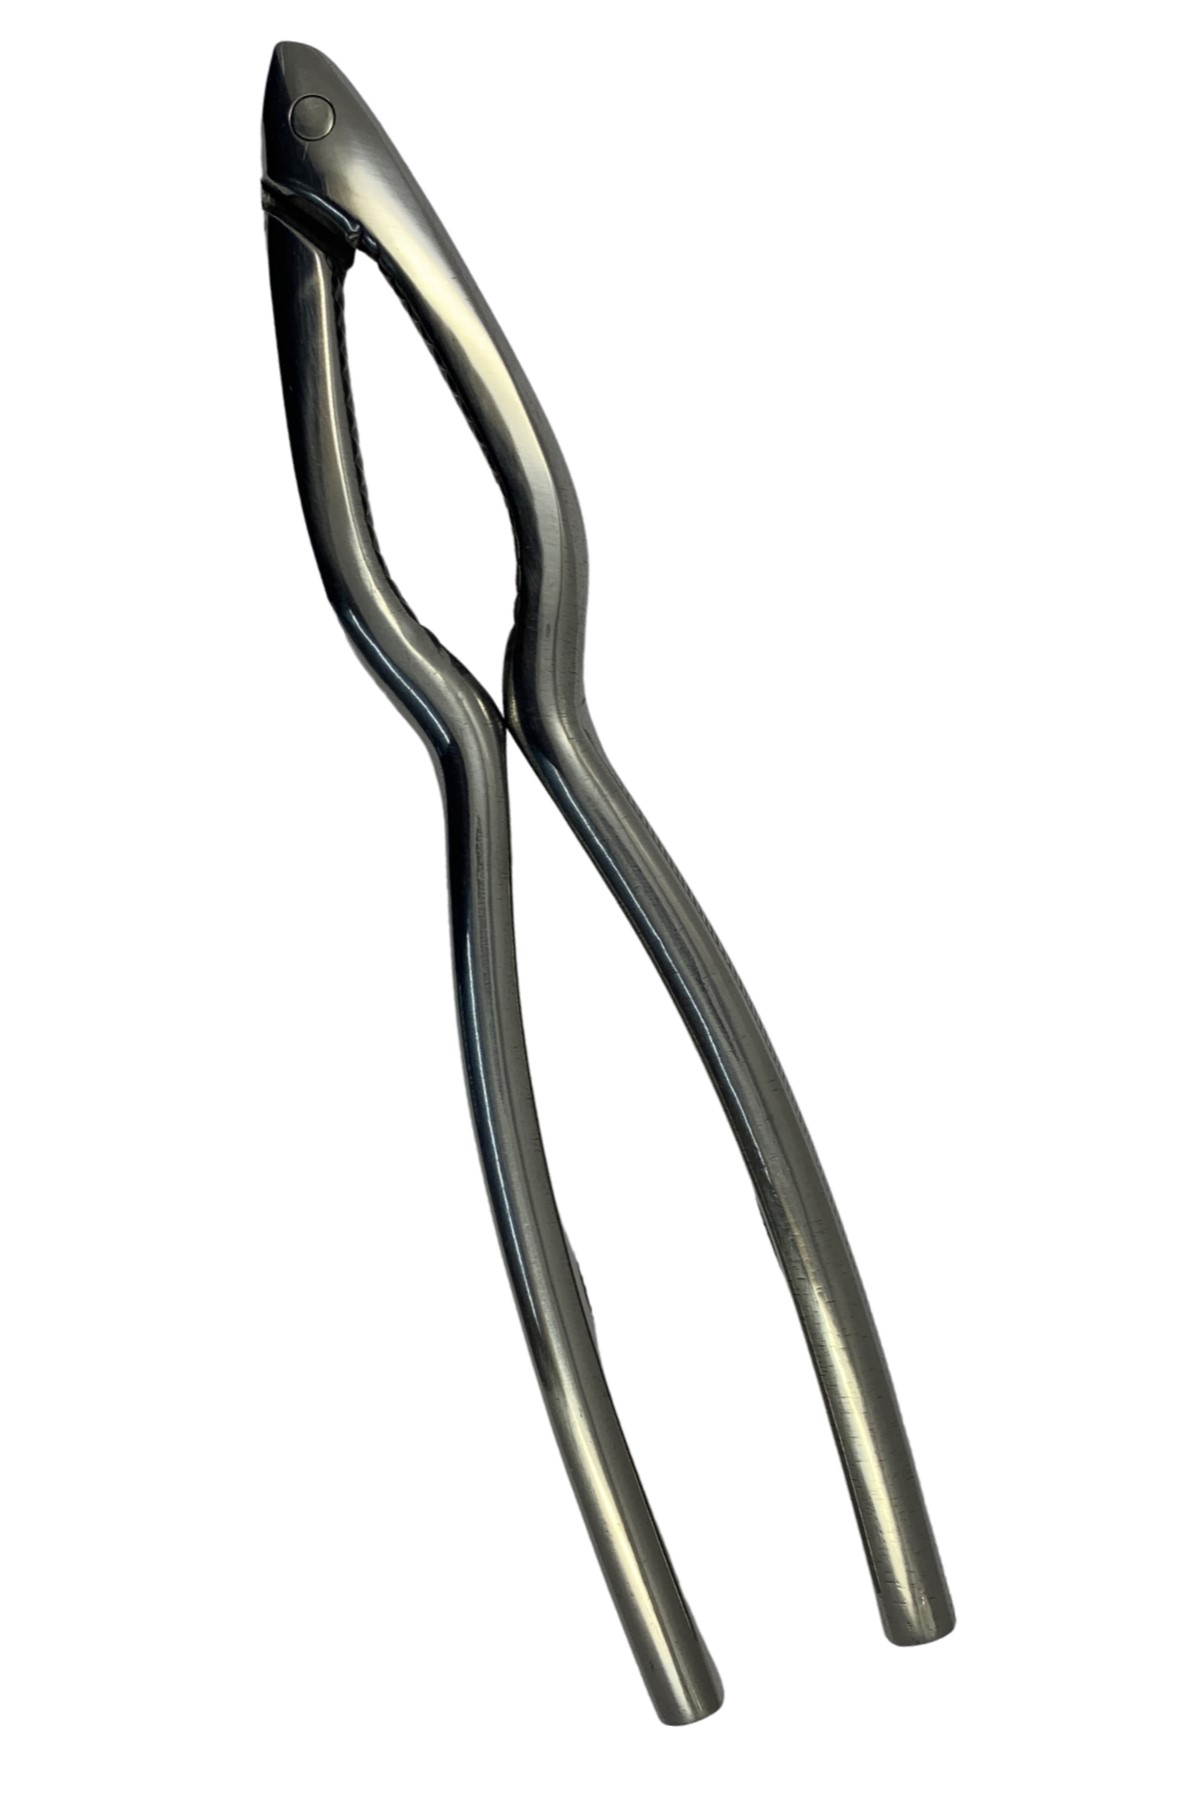 Quebra-nozes Inox 18,2 cm